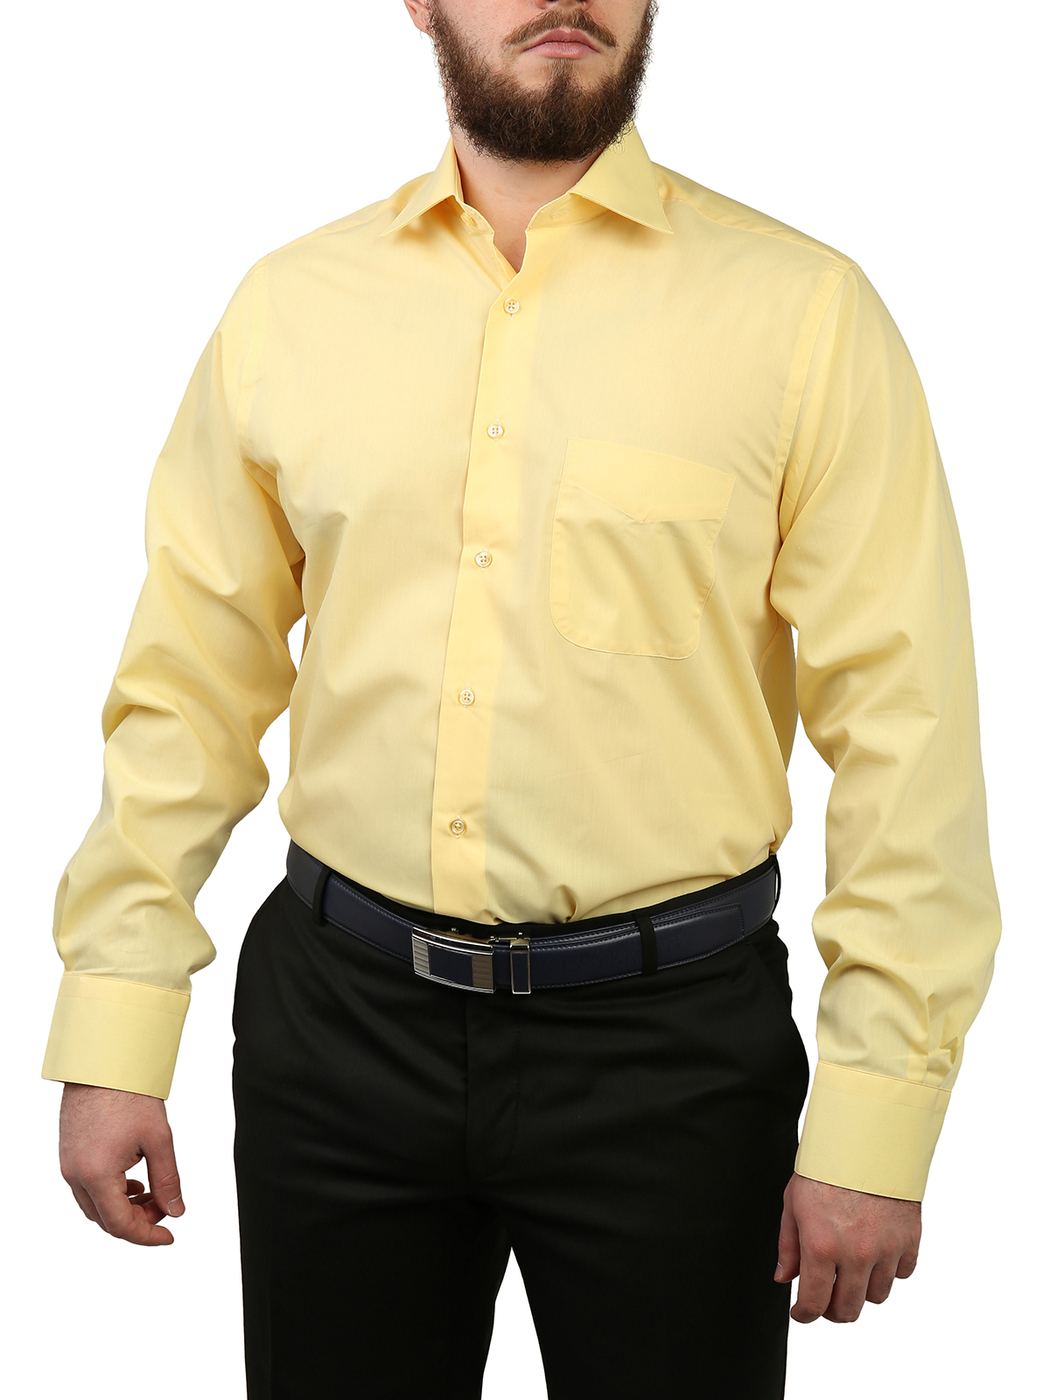 Мужчина в черном костюме и желтой рубашке